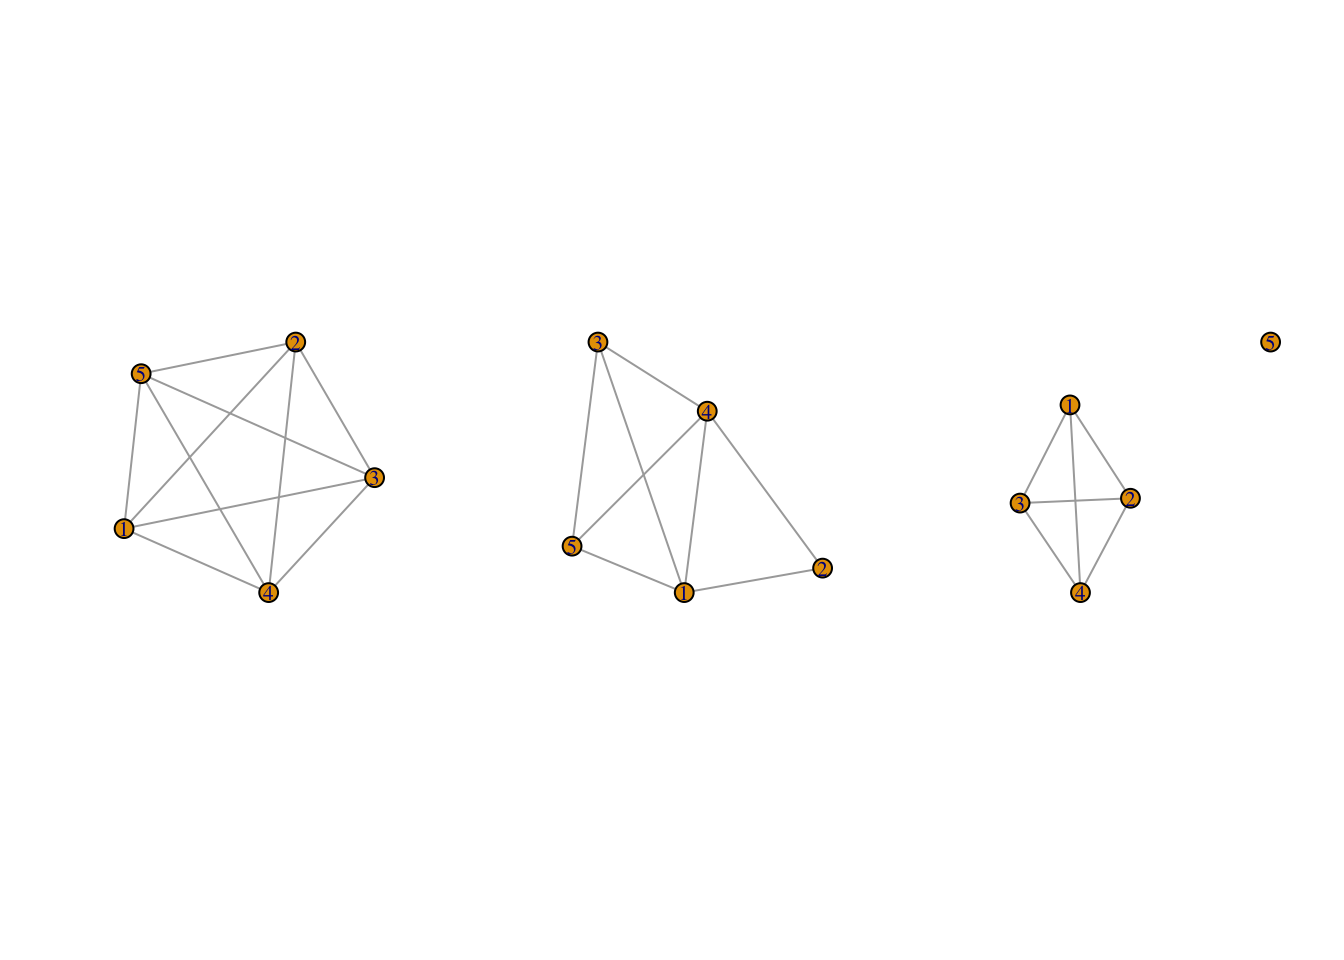 6 Ego Network Data  Network Analysis: Integrating Social Network